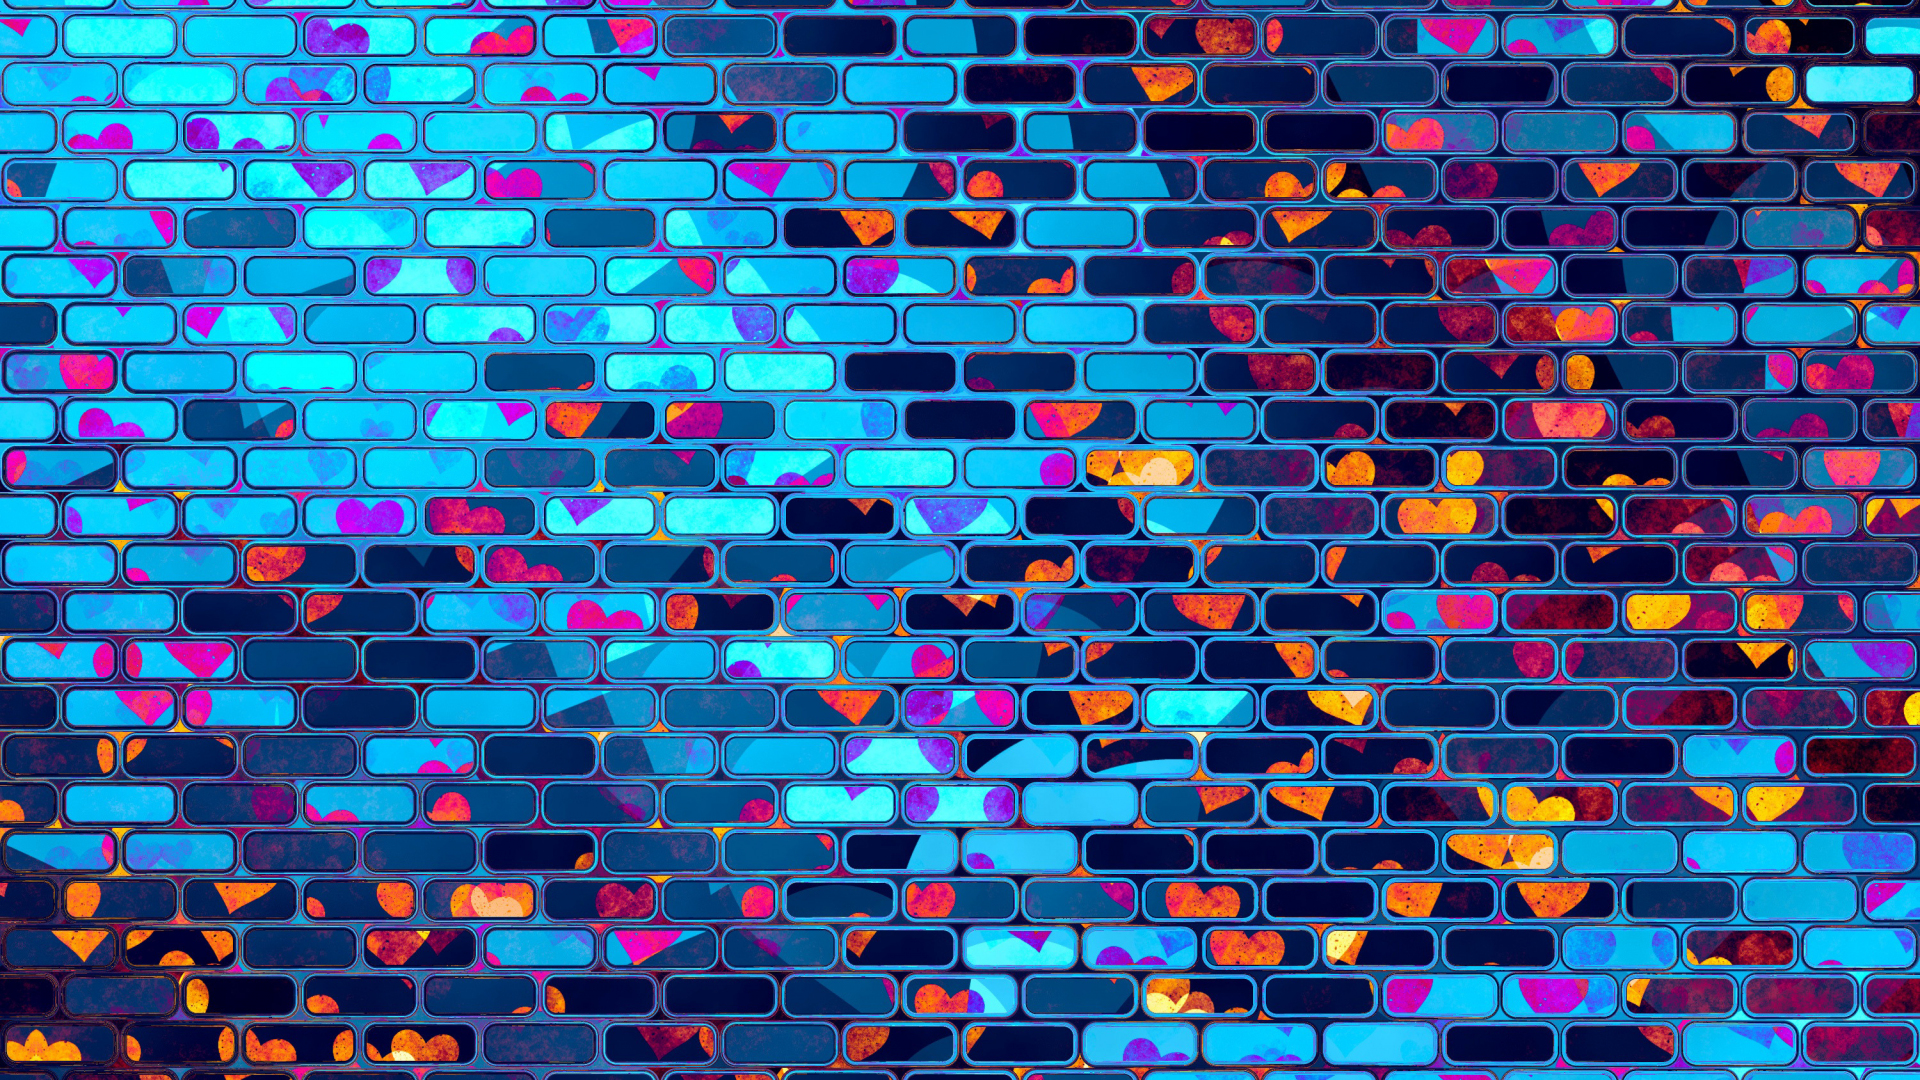 Download wallpaper 1920x1080 neon, hearts, brick wall, full hd, hdtv, fhd, 1080p  wallpaper, 1920x1080 hd background, 15032